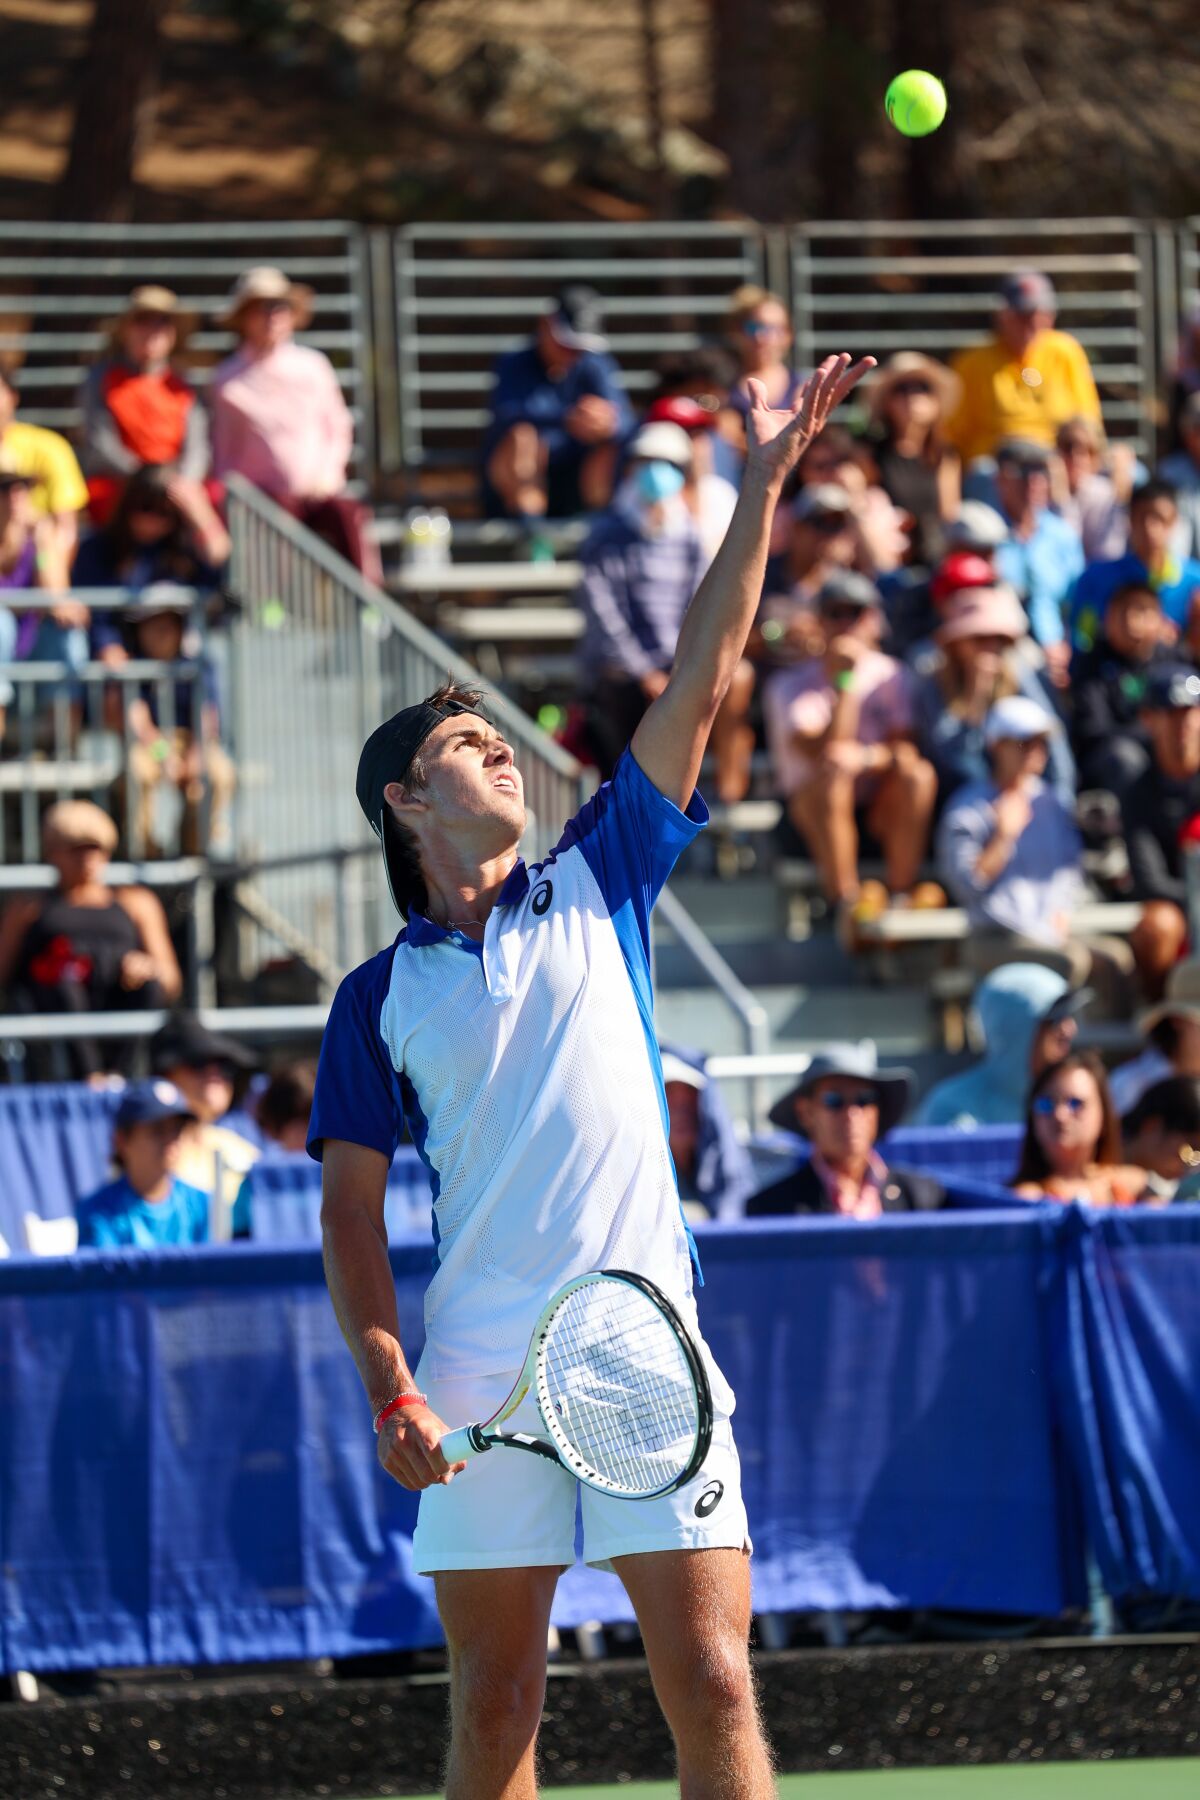 Zachary Svajda, 19, of La Jolla won the men's singles title of the Tiburon Challenger USTA Pro Circuit tennis event Oct. 9.